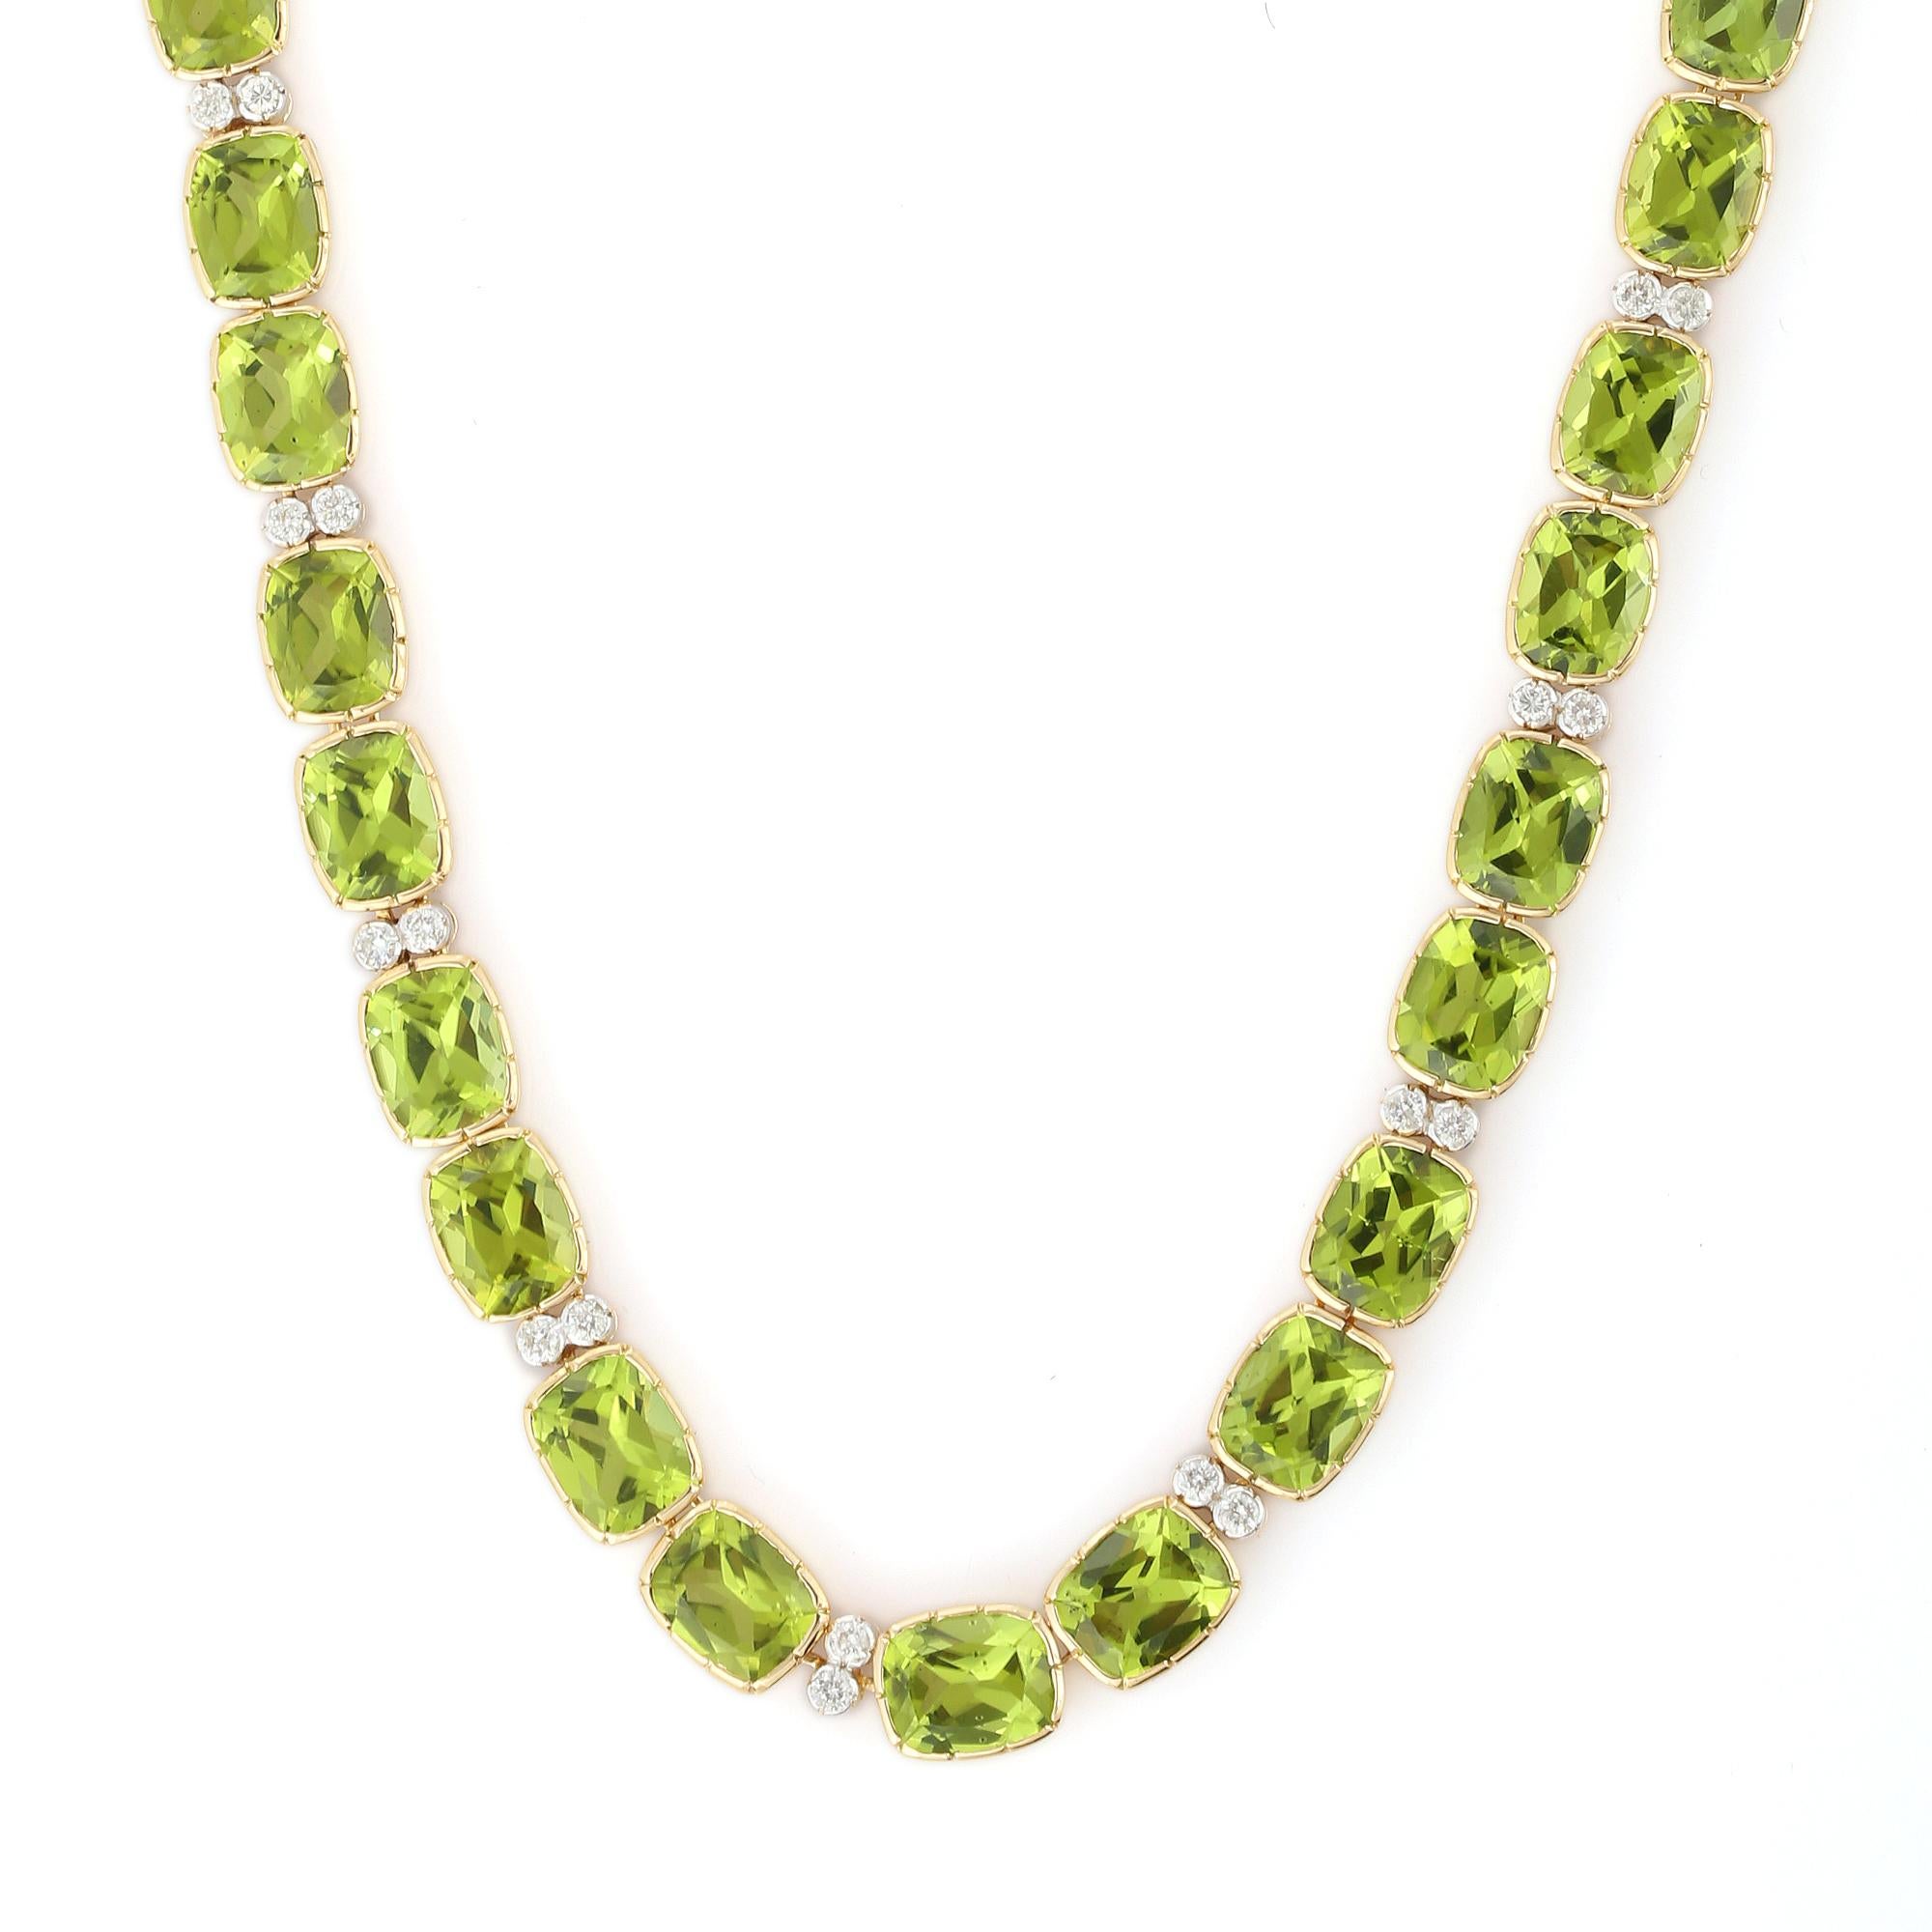 22" 40 STRAND PERIDOT GREEN JADE GEM LAYERED necklace SALE 